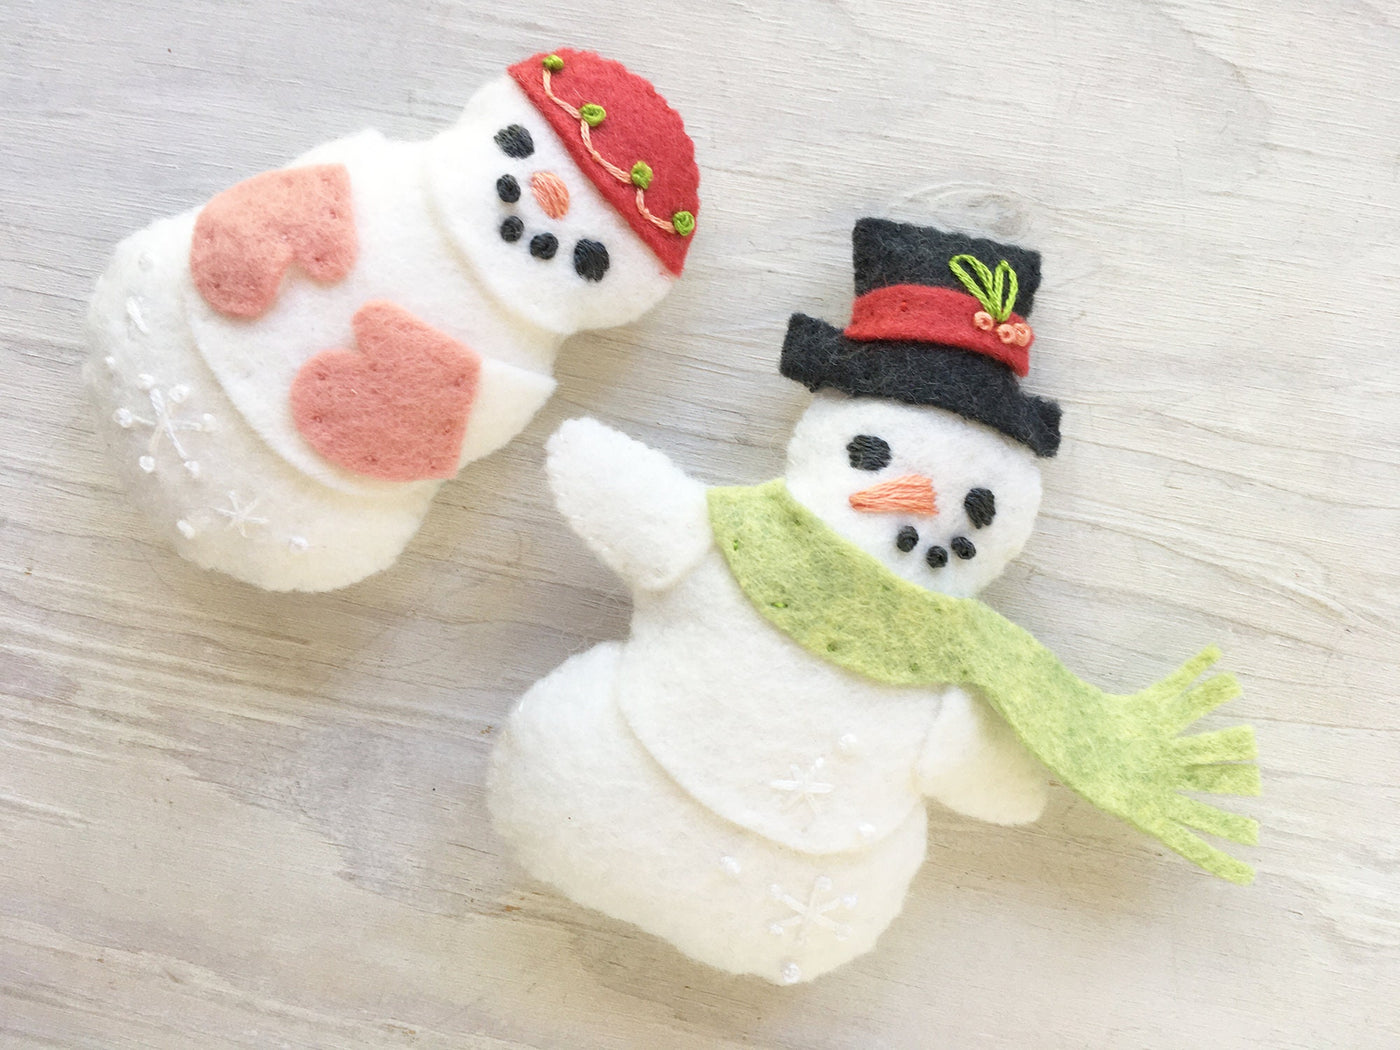 Snowman Family Felt Christmas Ornaments Sewing Pattern